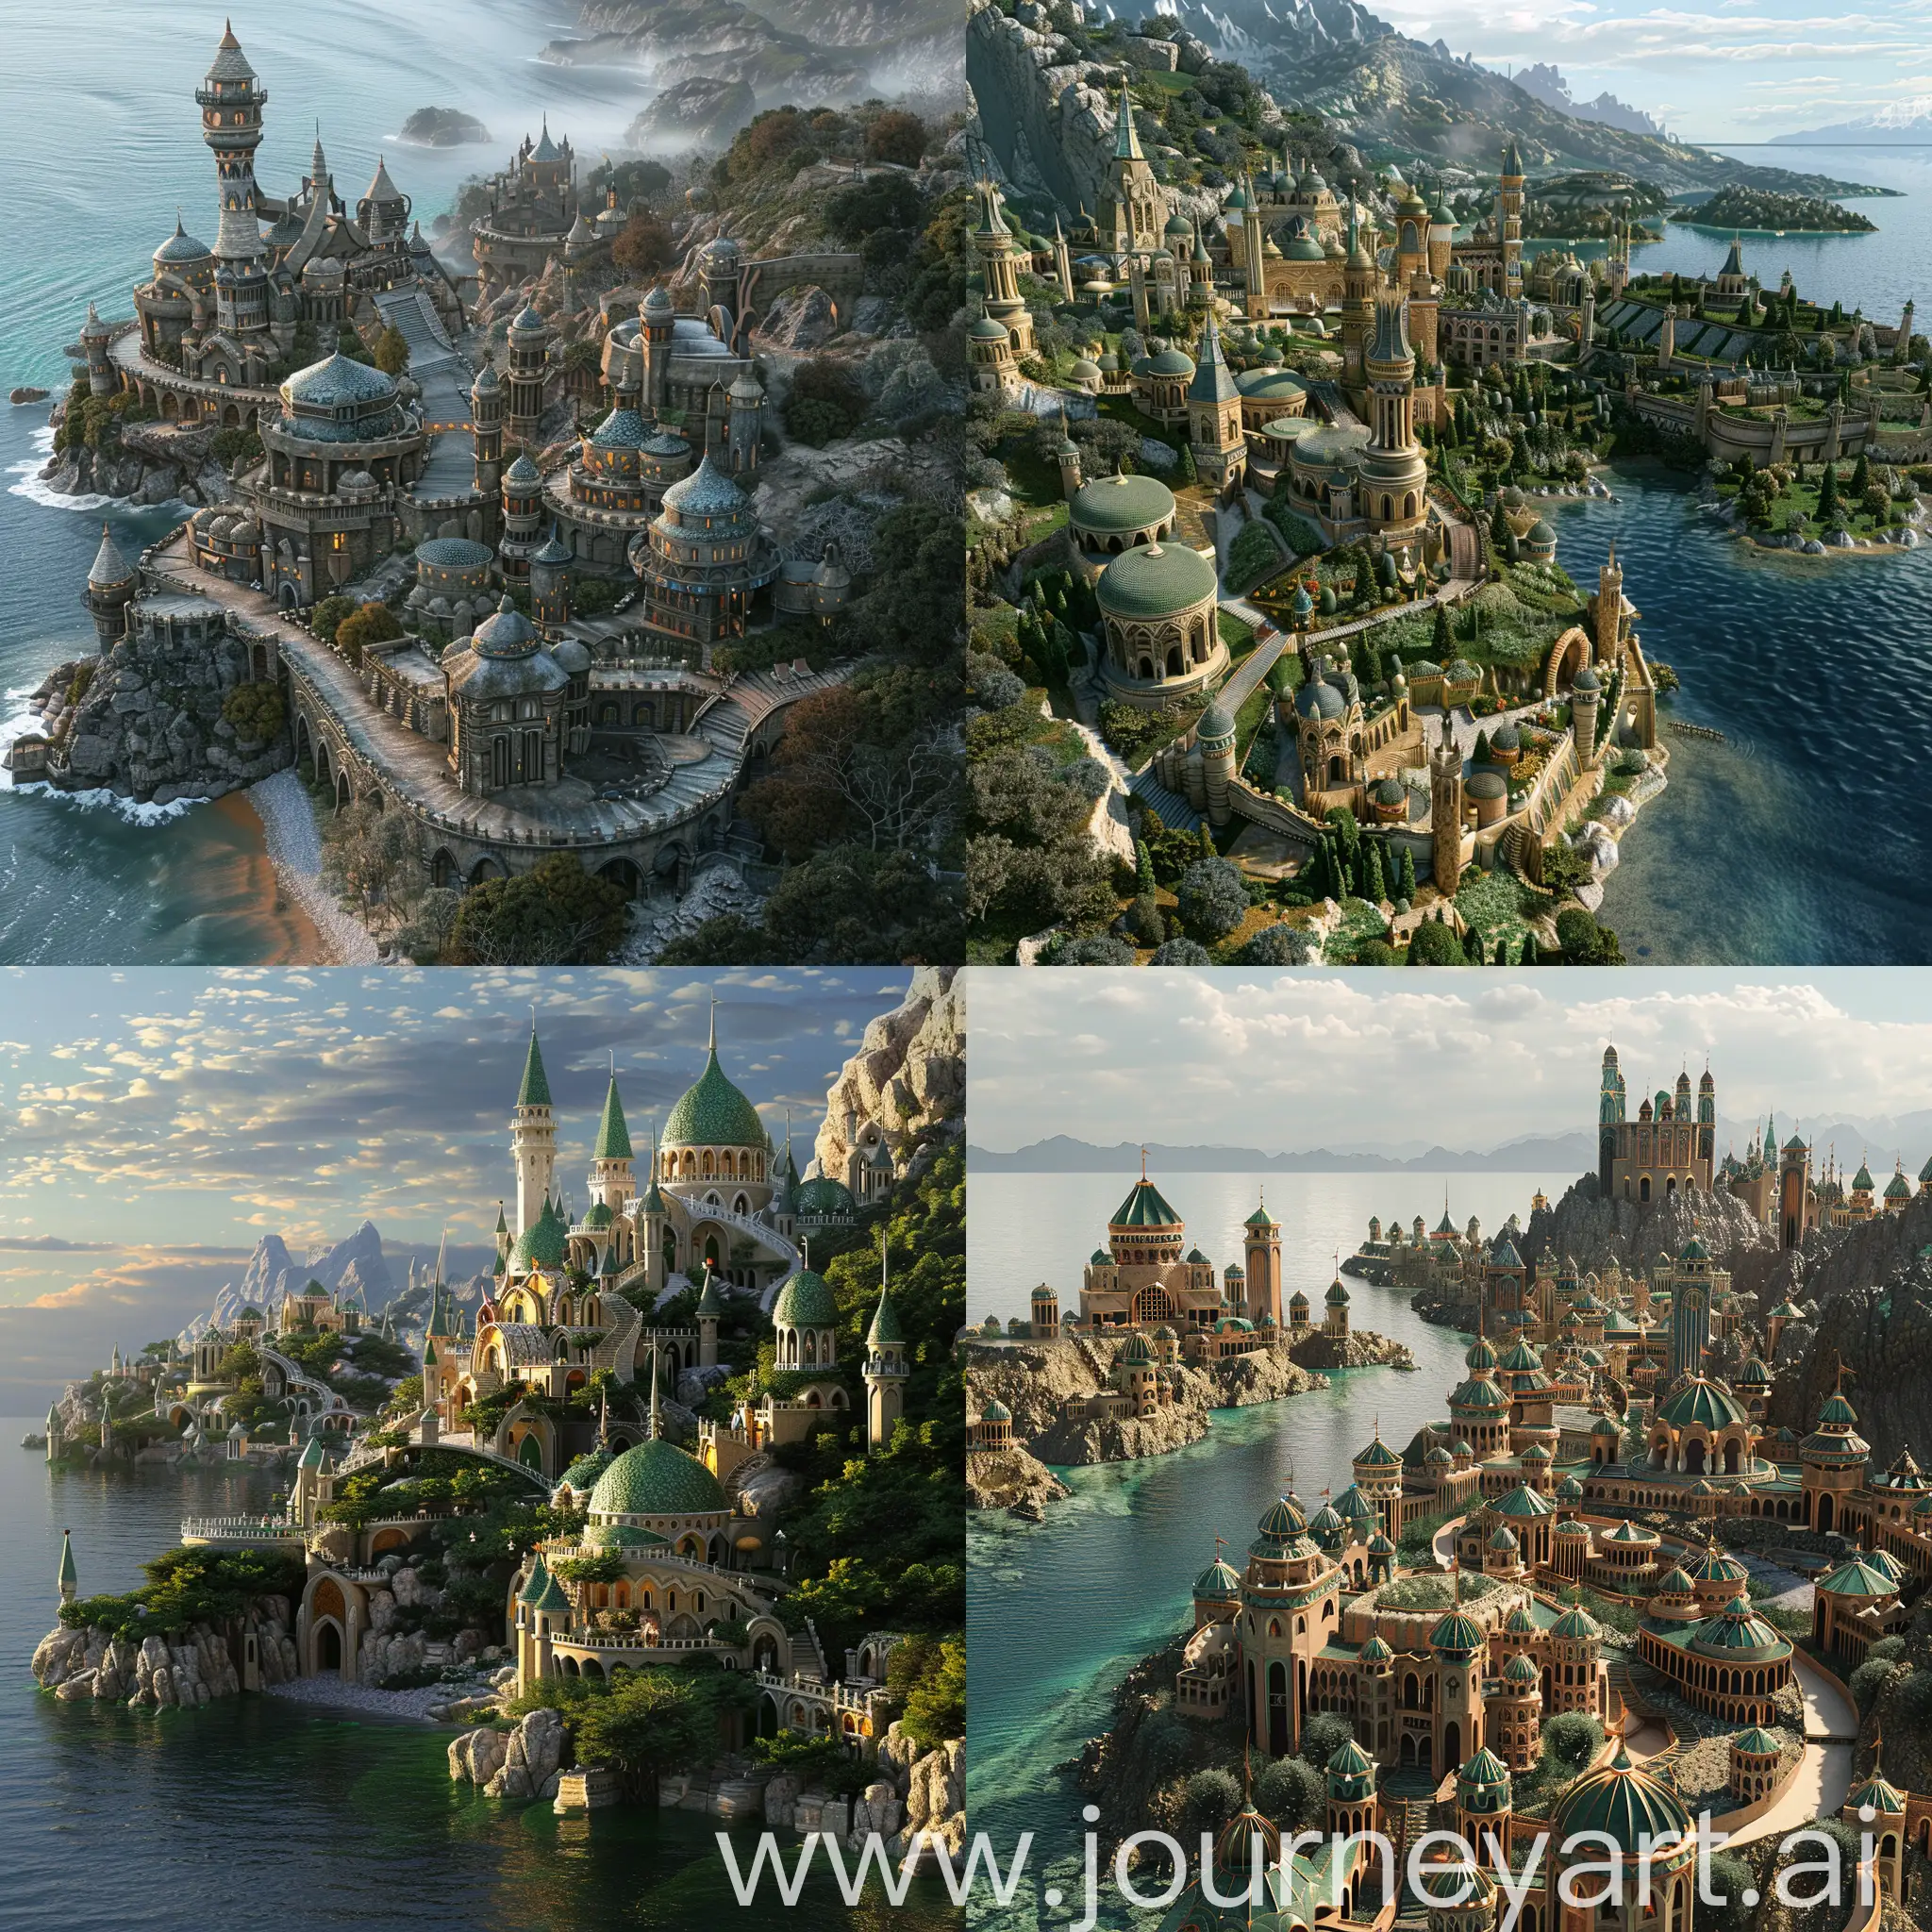 elven city , sindorei style, located near the sea on the coast. 